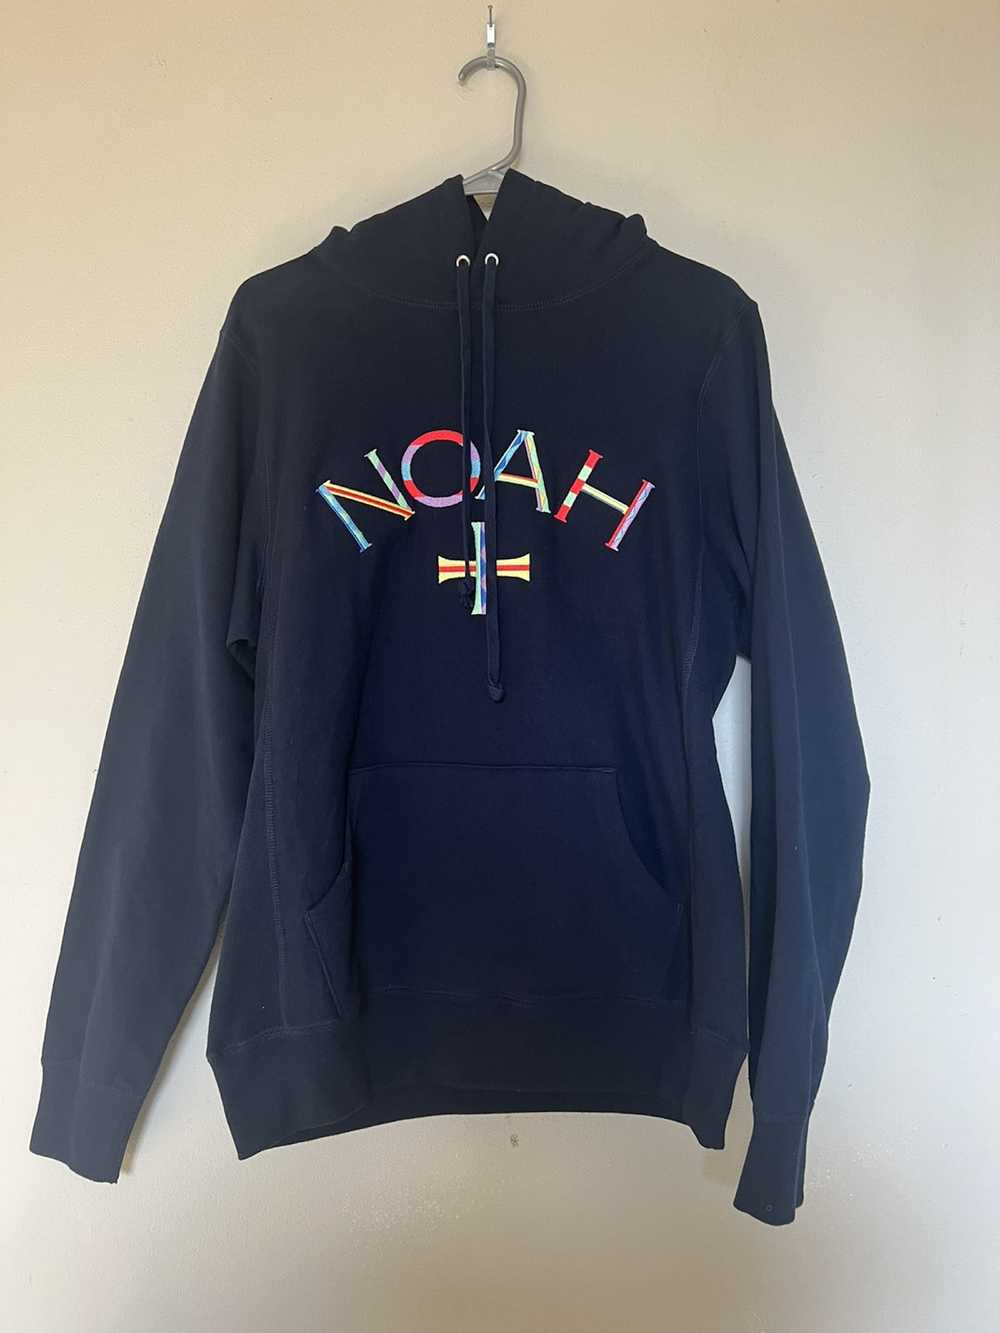 Noah Noah Embroidered Multicolor Logo Hoodie - image 1